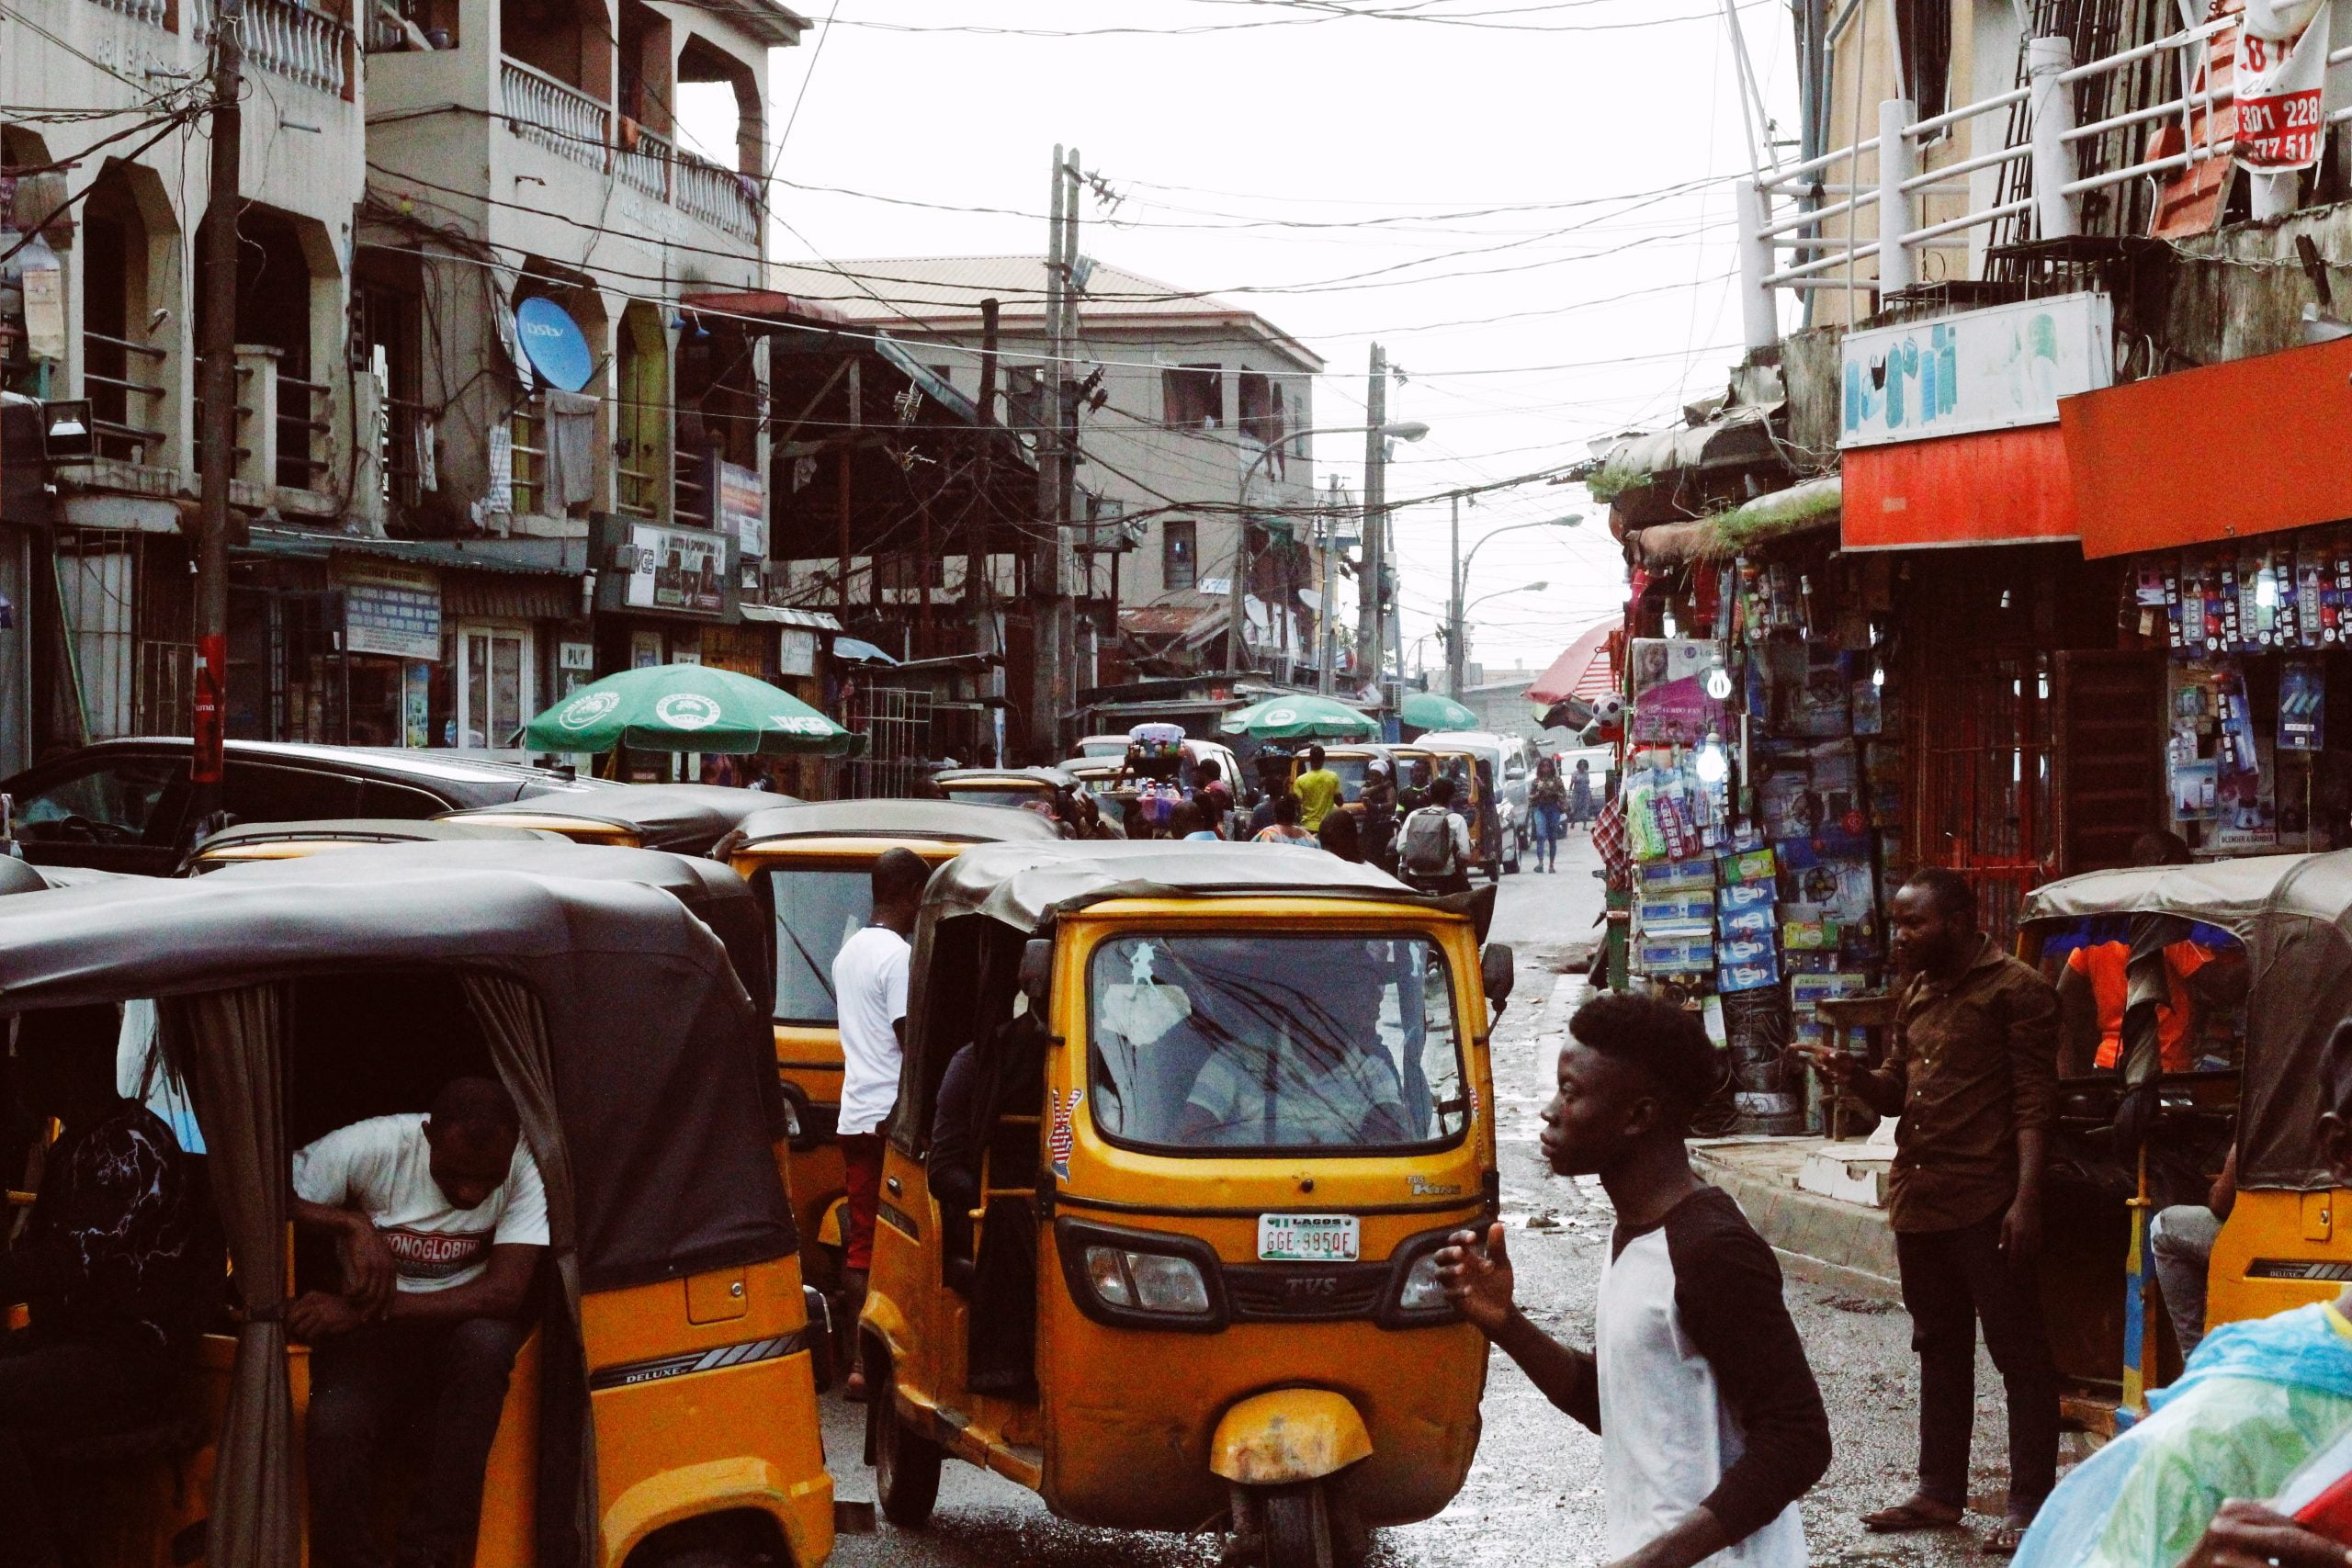 A busy street in Lagos, Nigeria